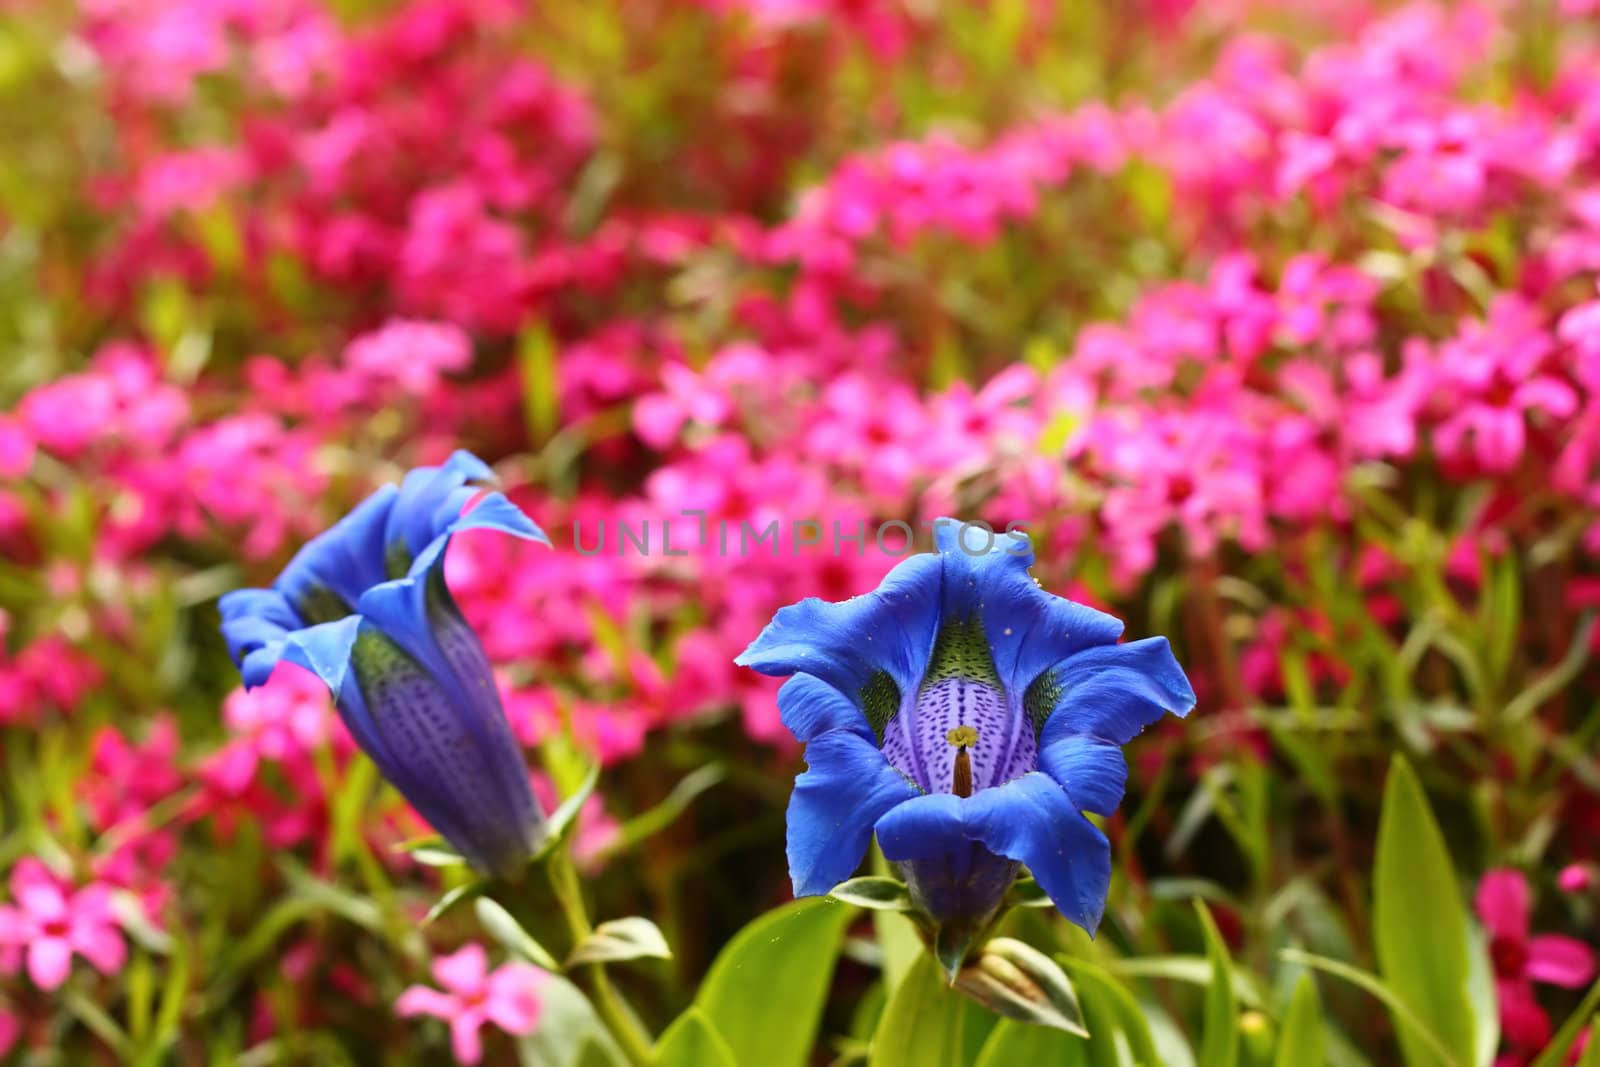 Trumpet gentian, blue spring flower in garden with pink flowers in background